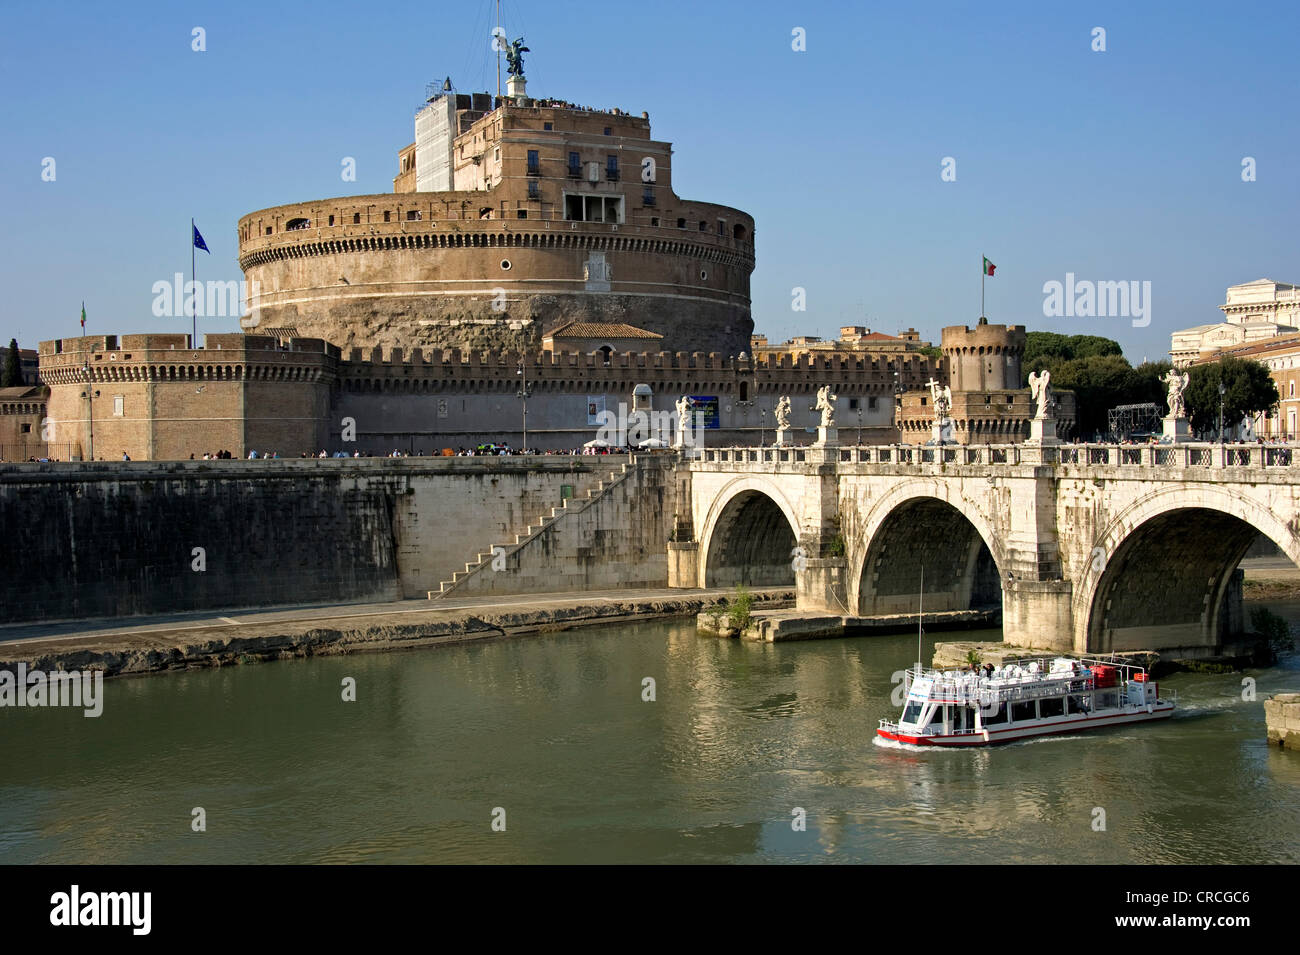 Castel Sant'Angelo or Mausoleum of Hadrian and bridge Ponte Sant'Angelo, Tiber river with ship, Rome, Lazio, Italy, Europe Stock Photo